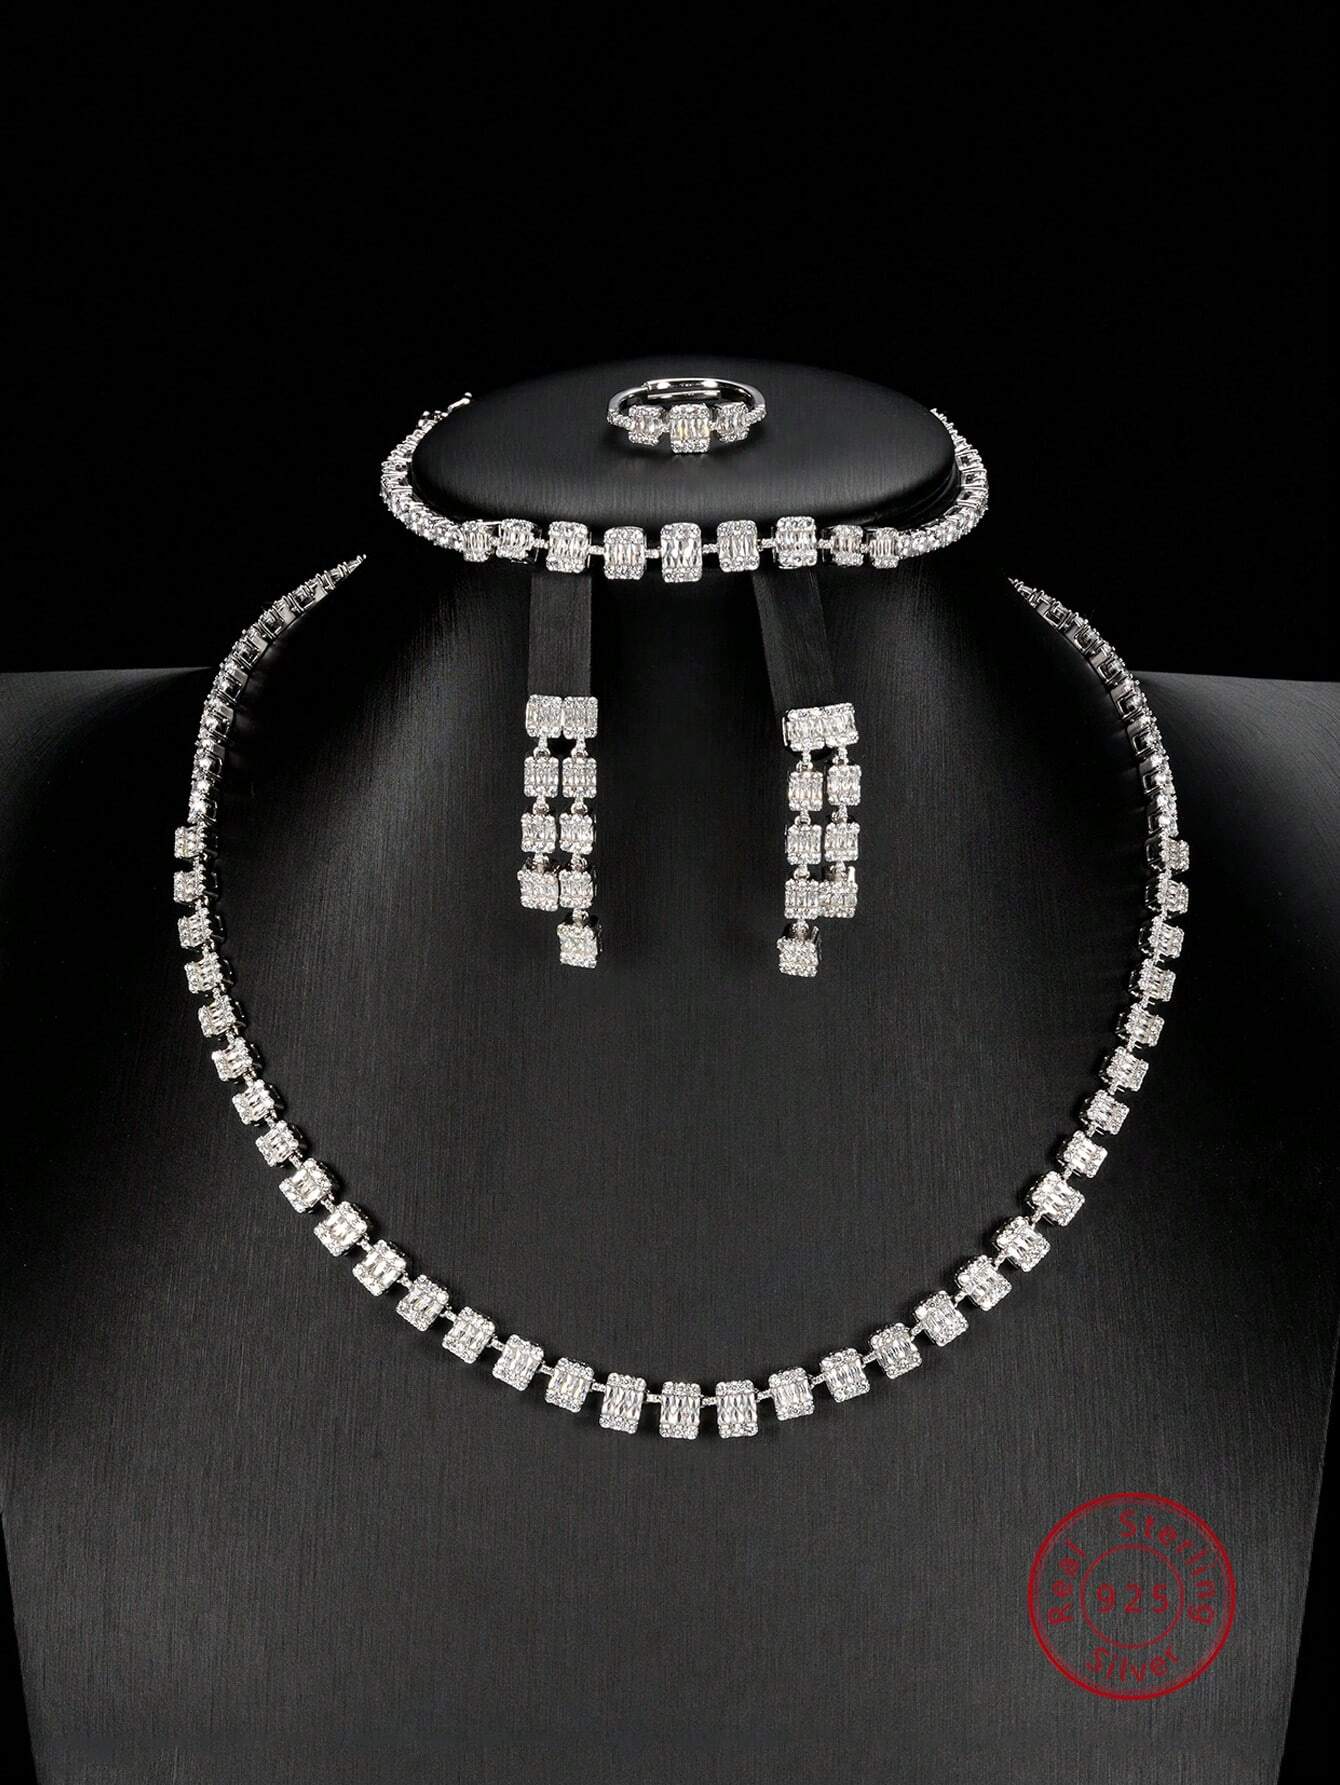 Sterling Silver Luxury Jewelry Set